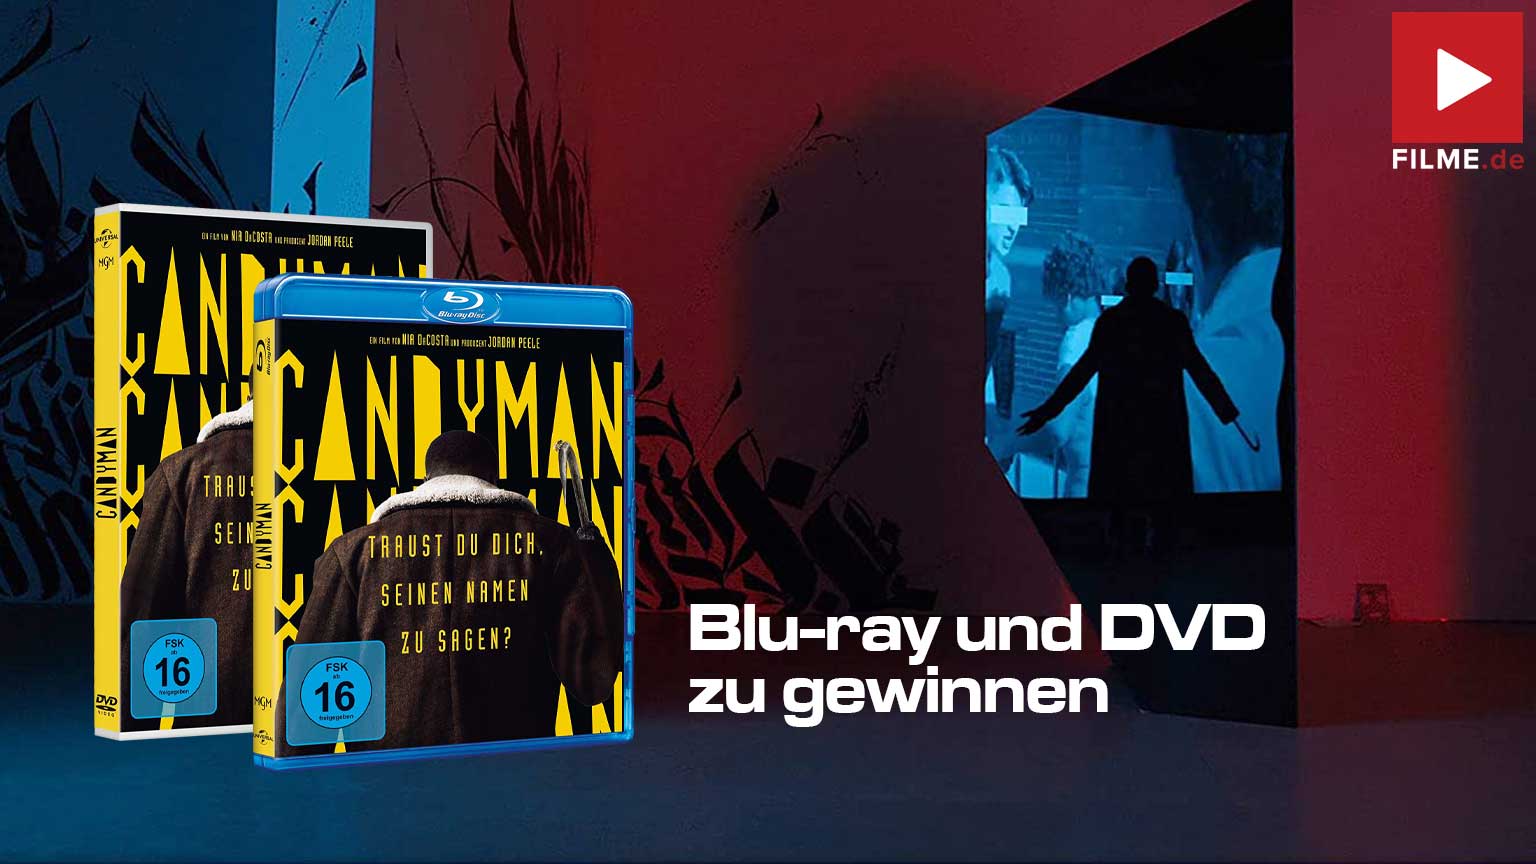 Candyman 2021 Blu-ray DVD Gewinnspiel gewinnen Artikelbild